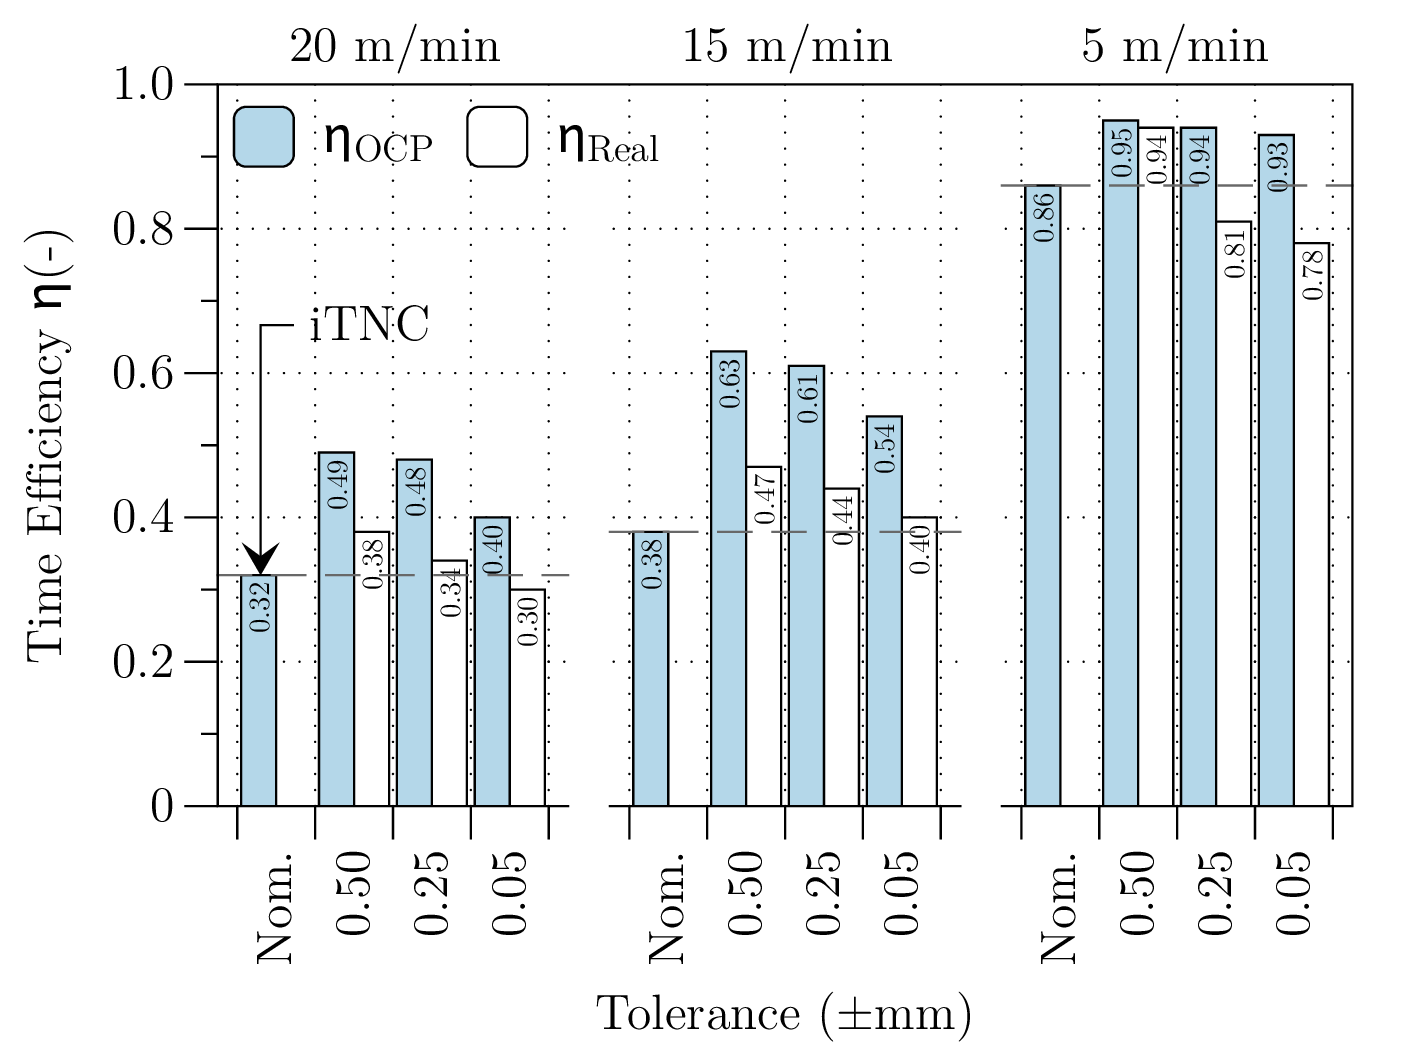 Comparison for time efficiency metric \eta